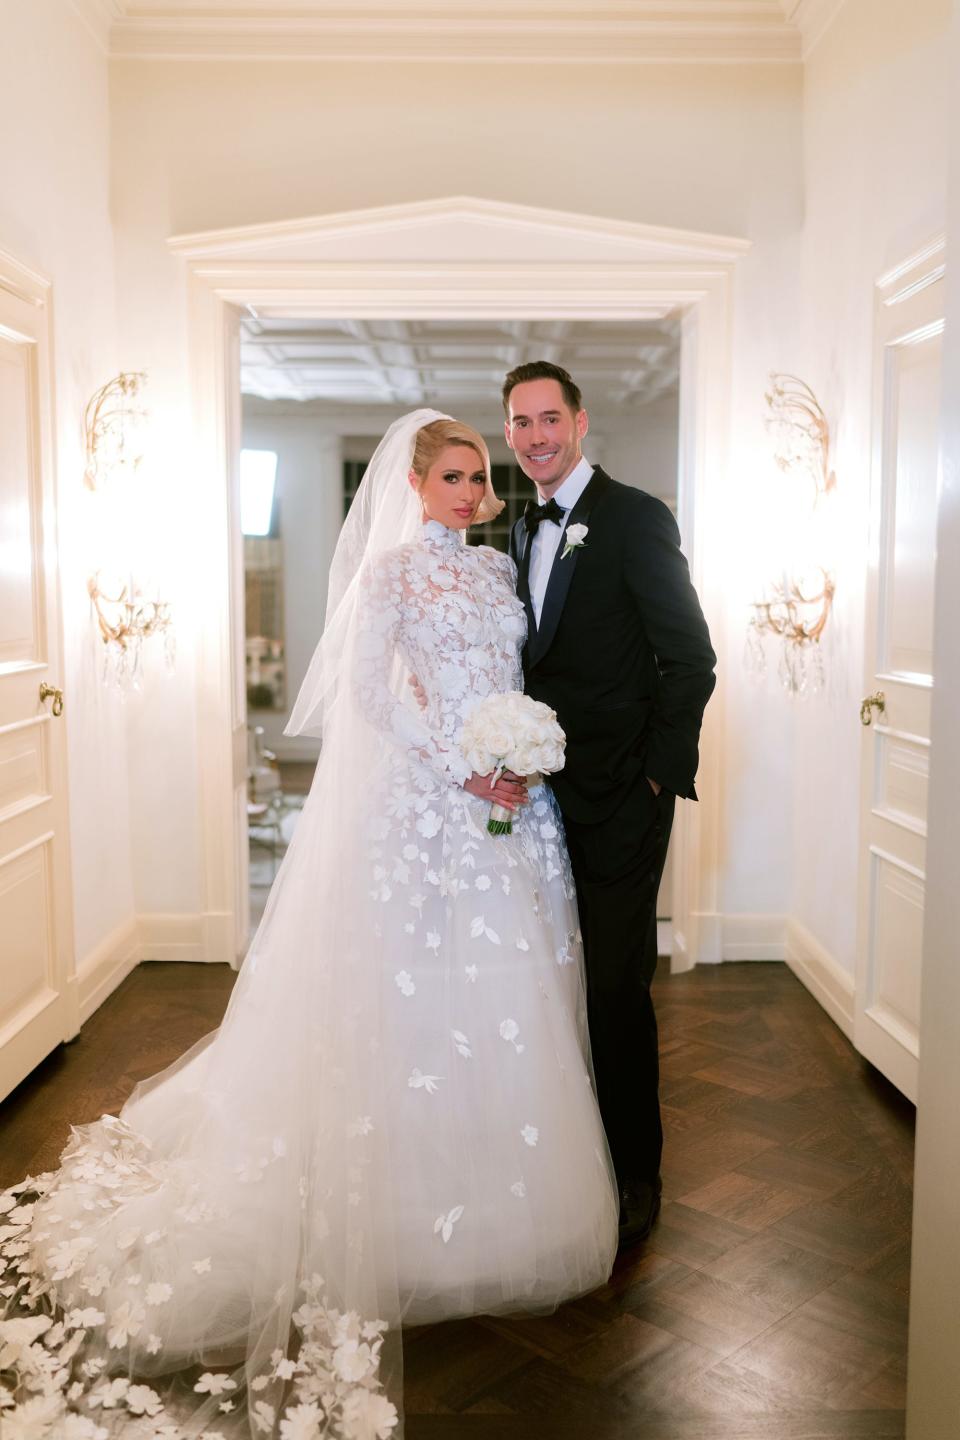 Paris Hilton and Carter Reum pose in their wedding attire.